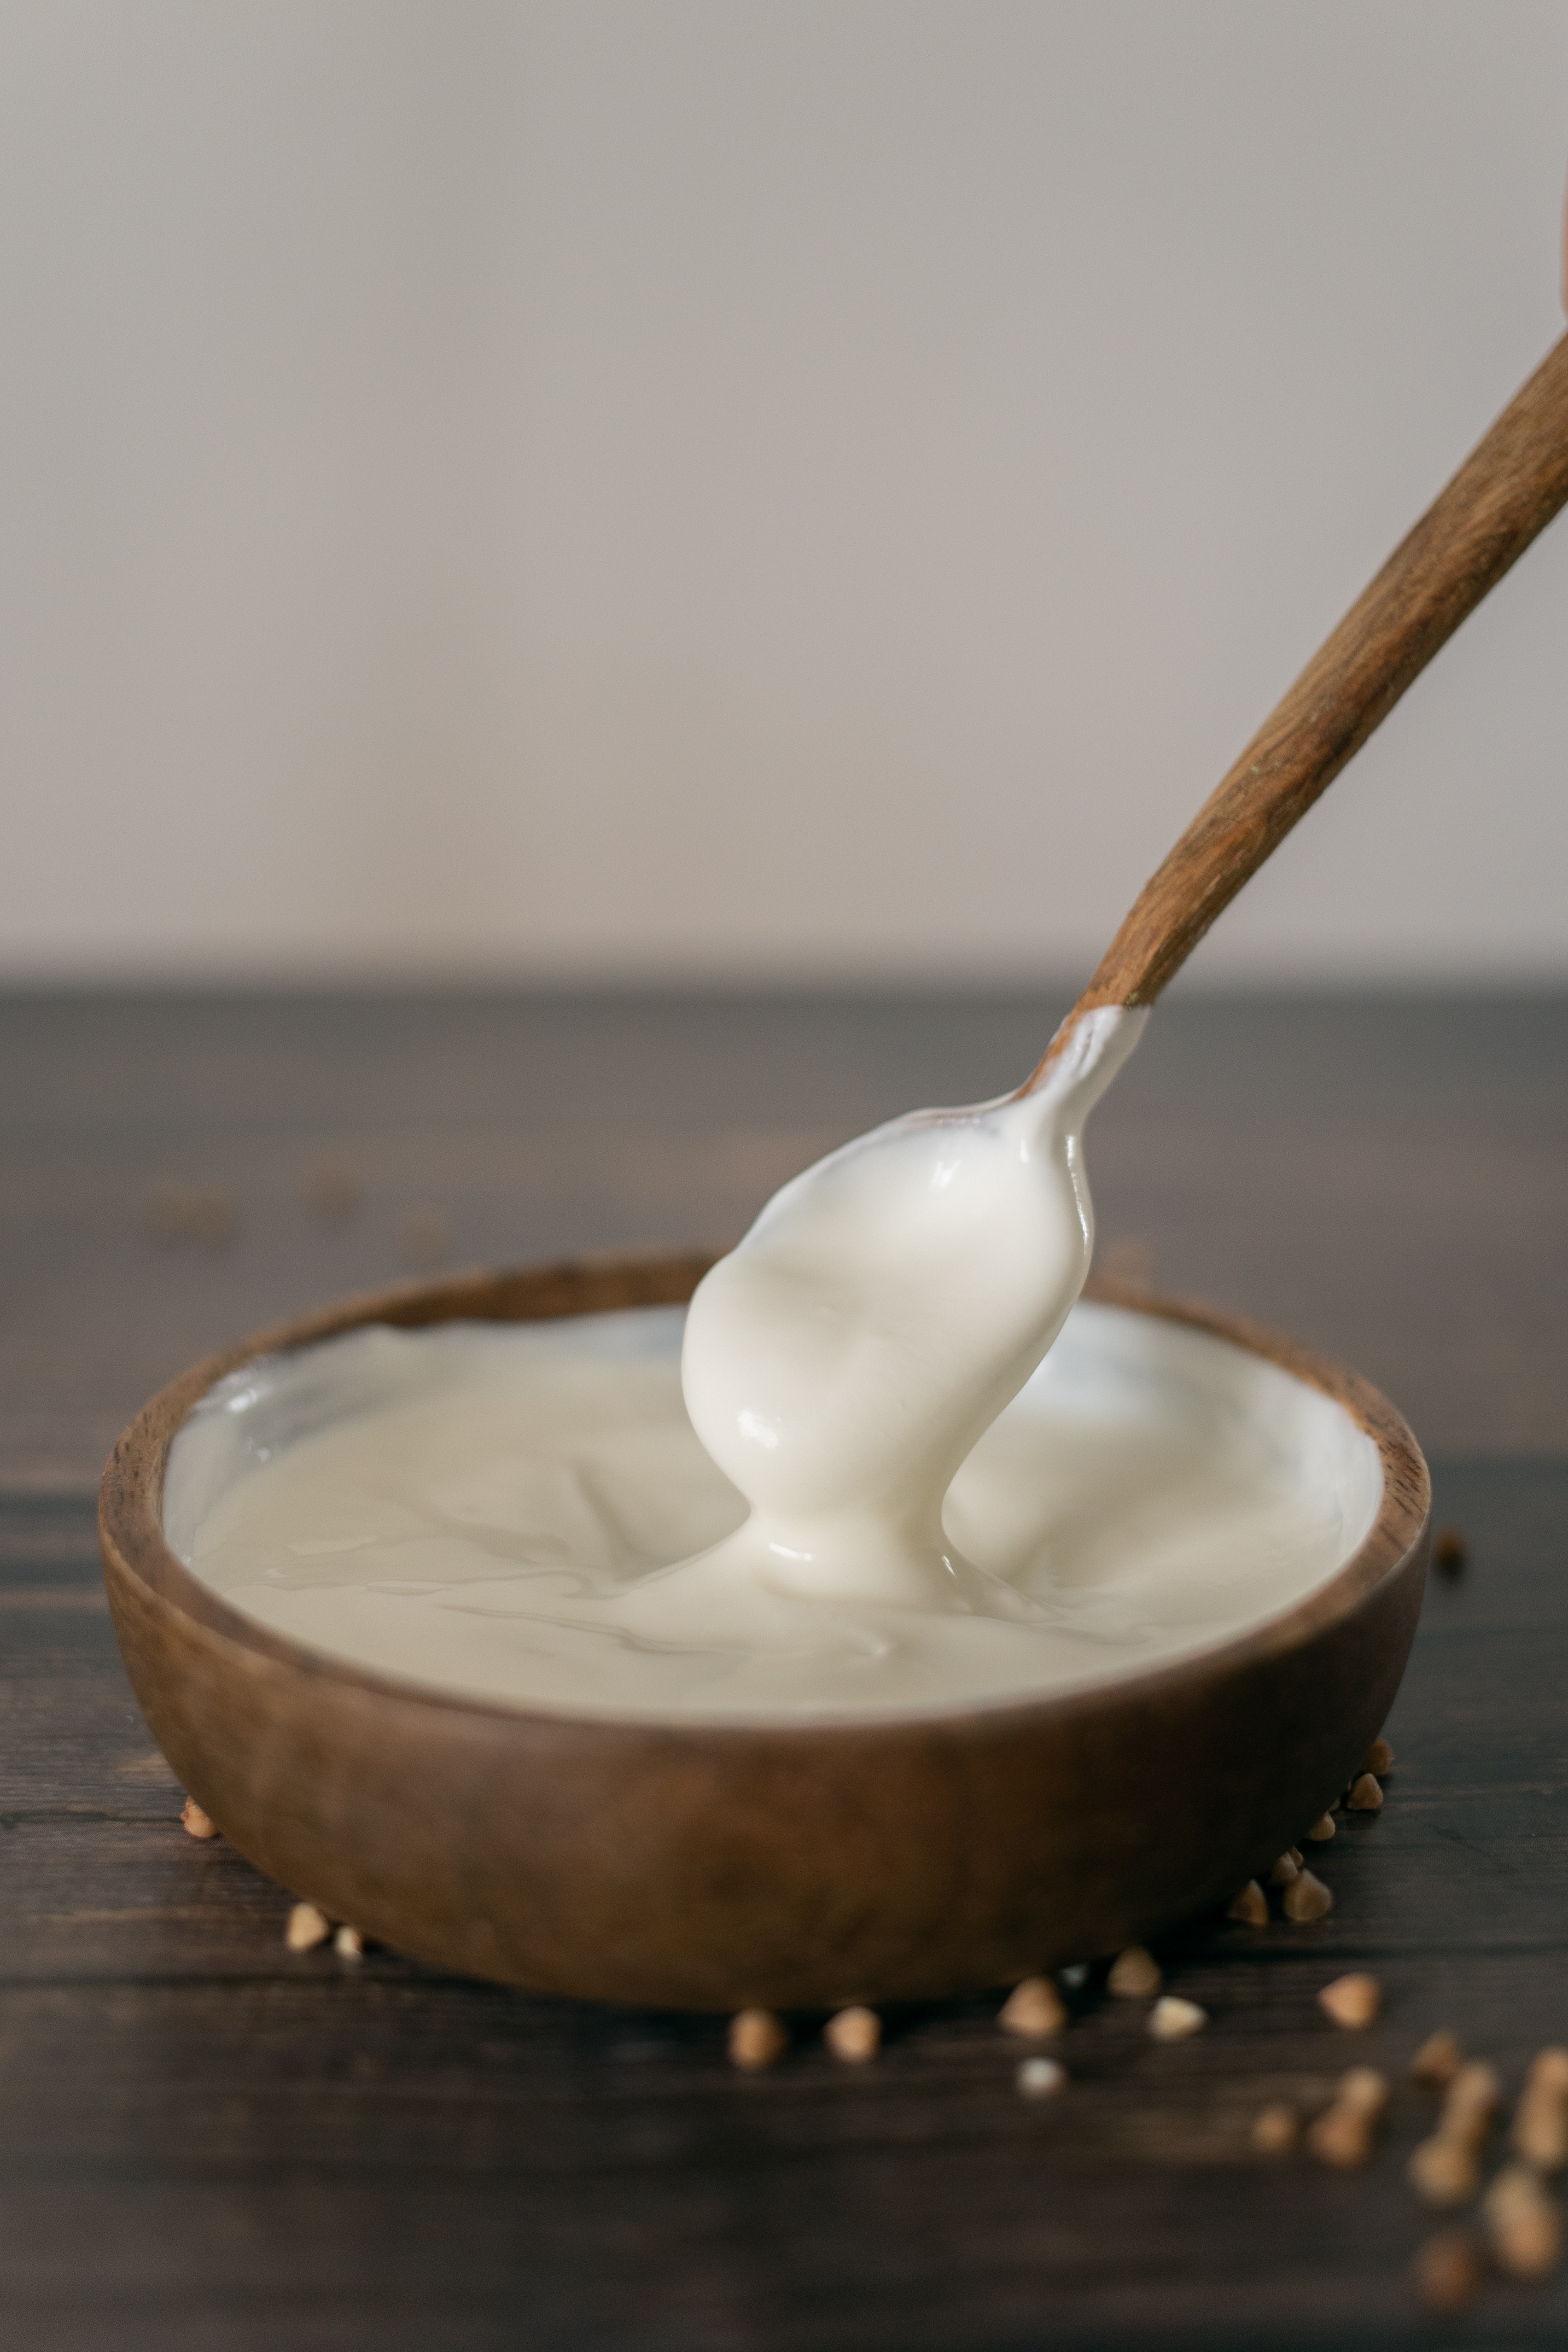  Yugurt as a good source of Probiotics